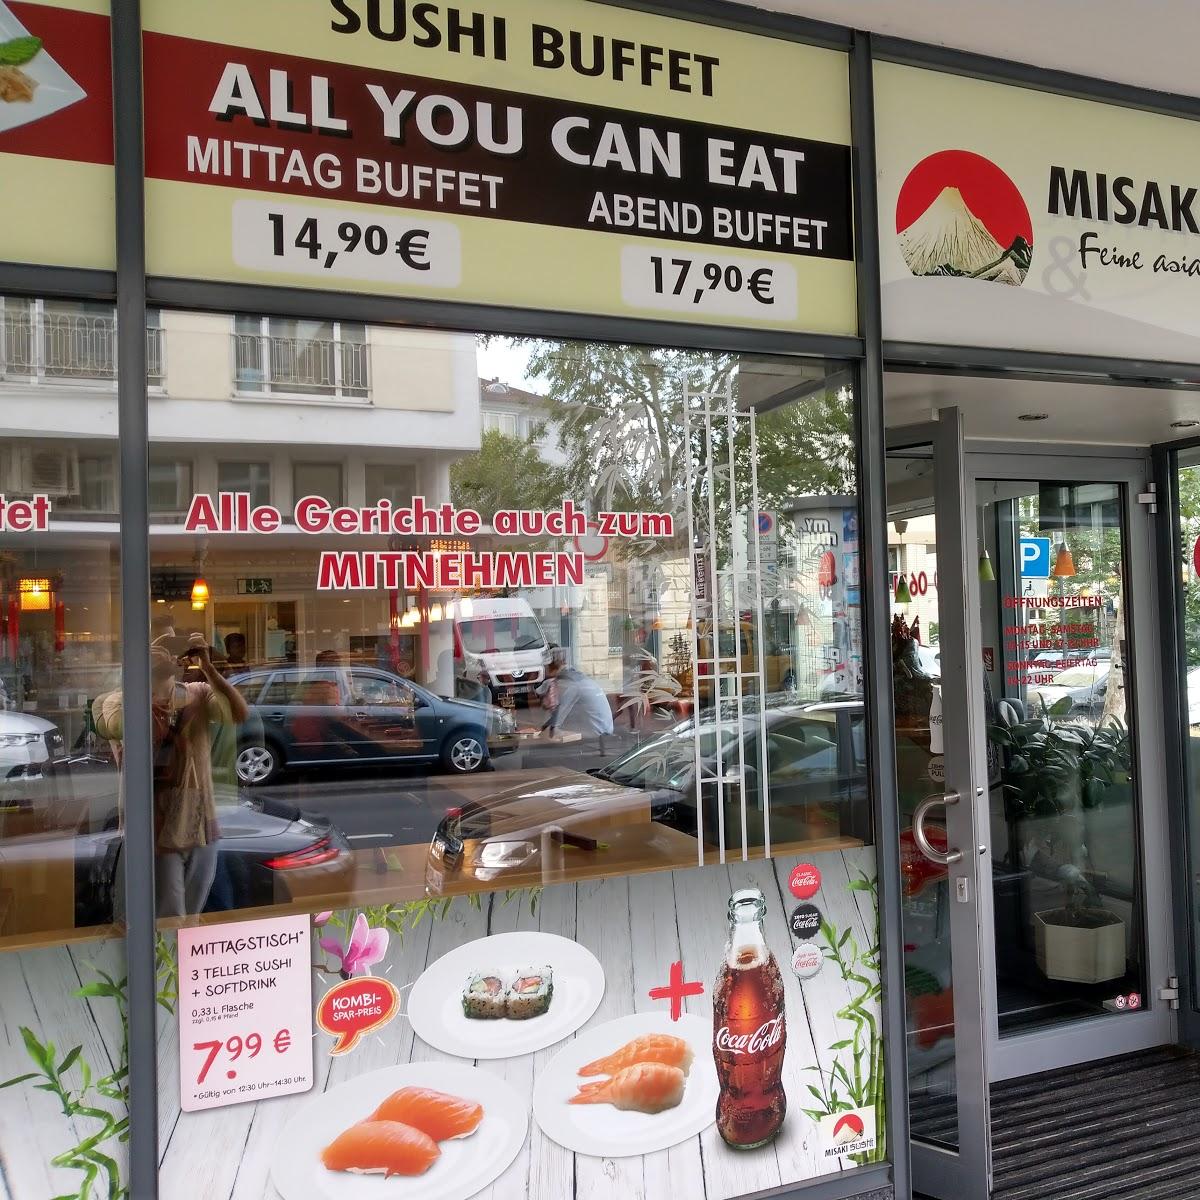 Restaurant "Misaki Sushi" in Wiesbaden